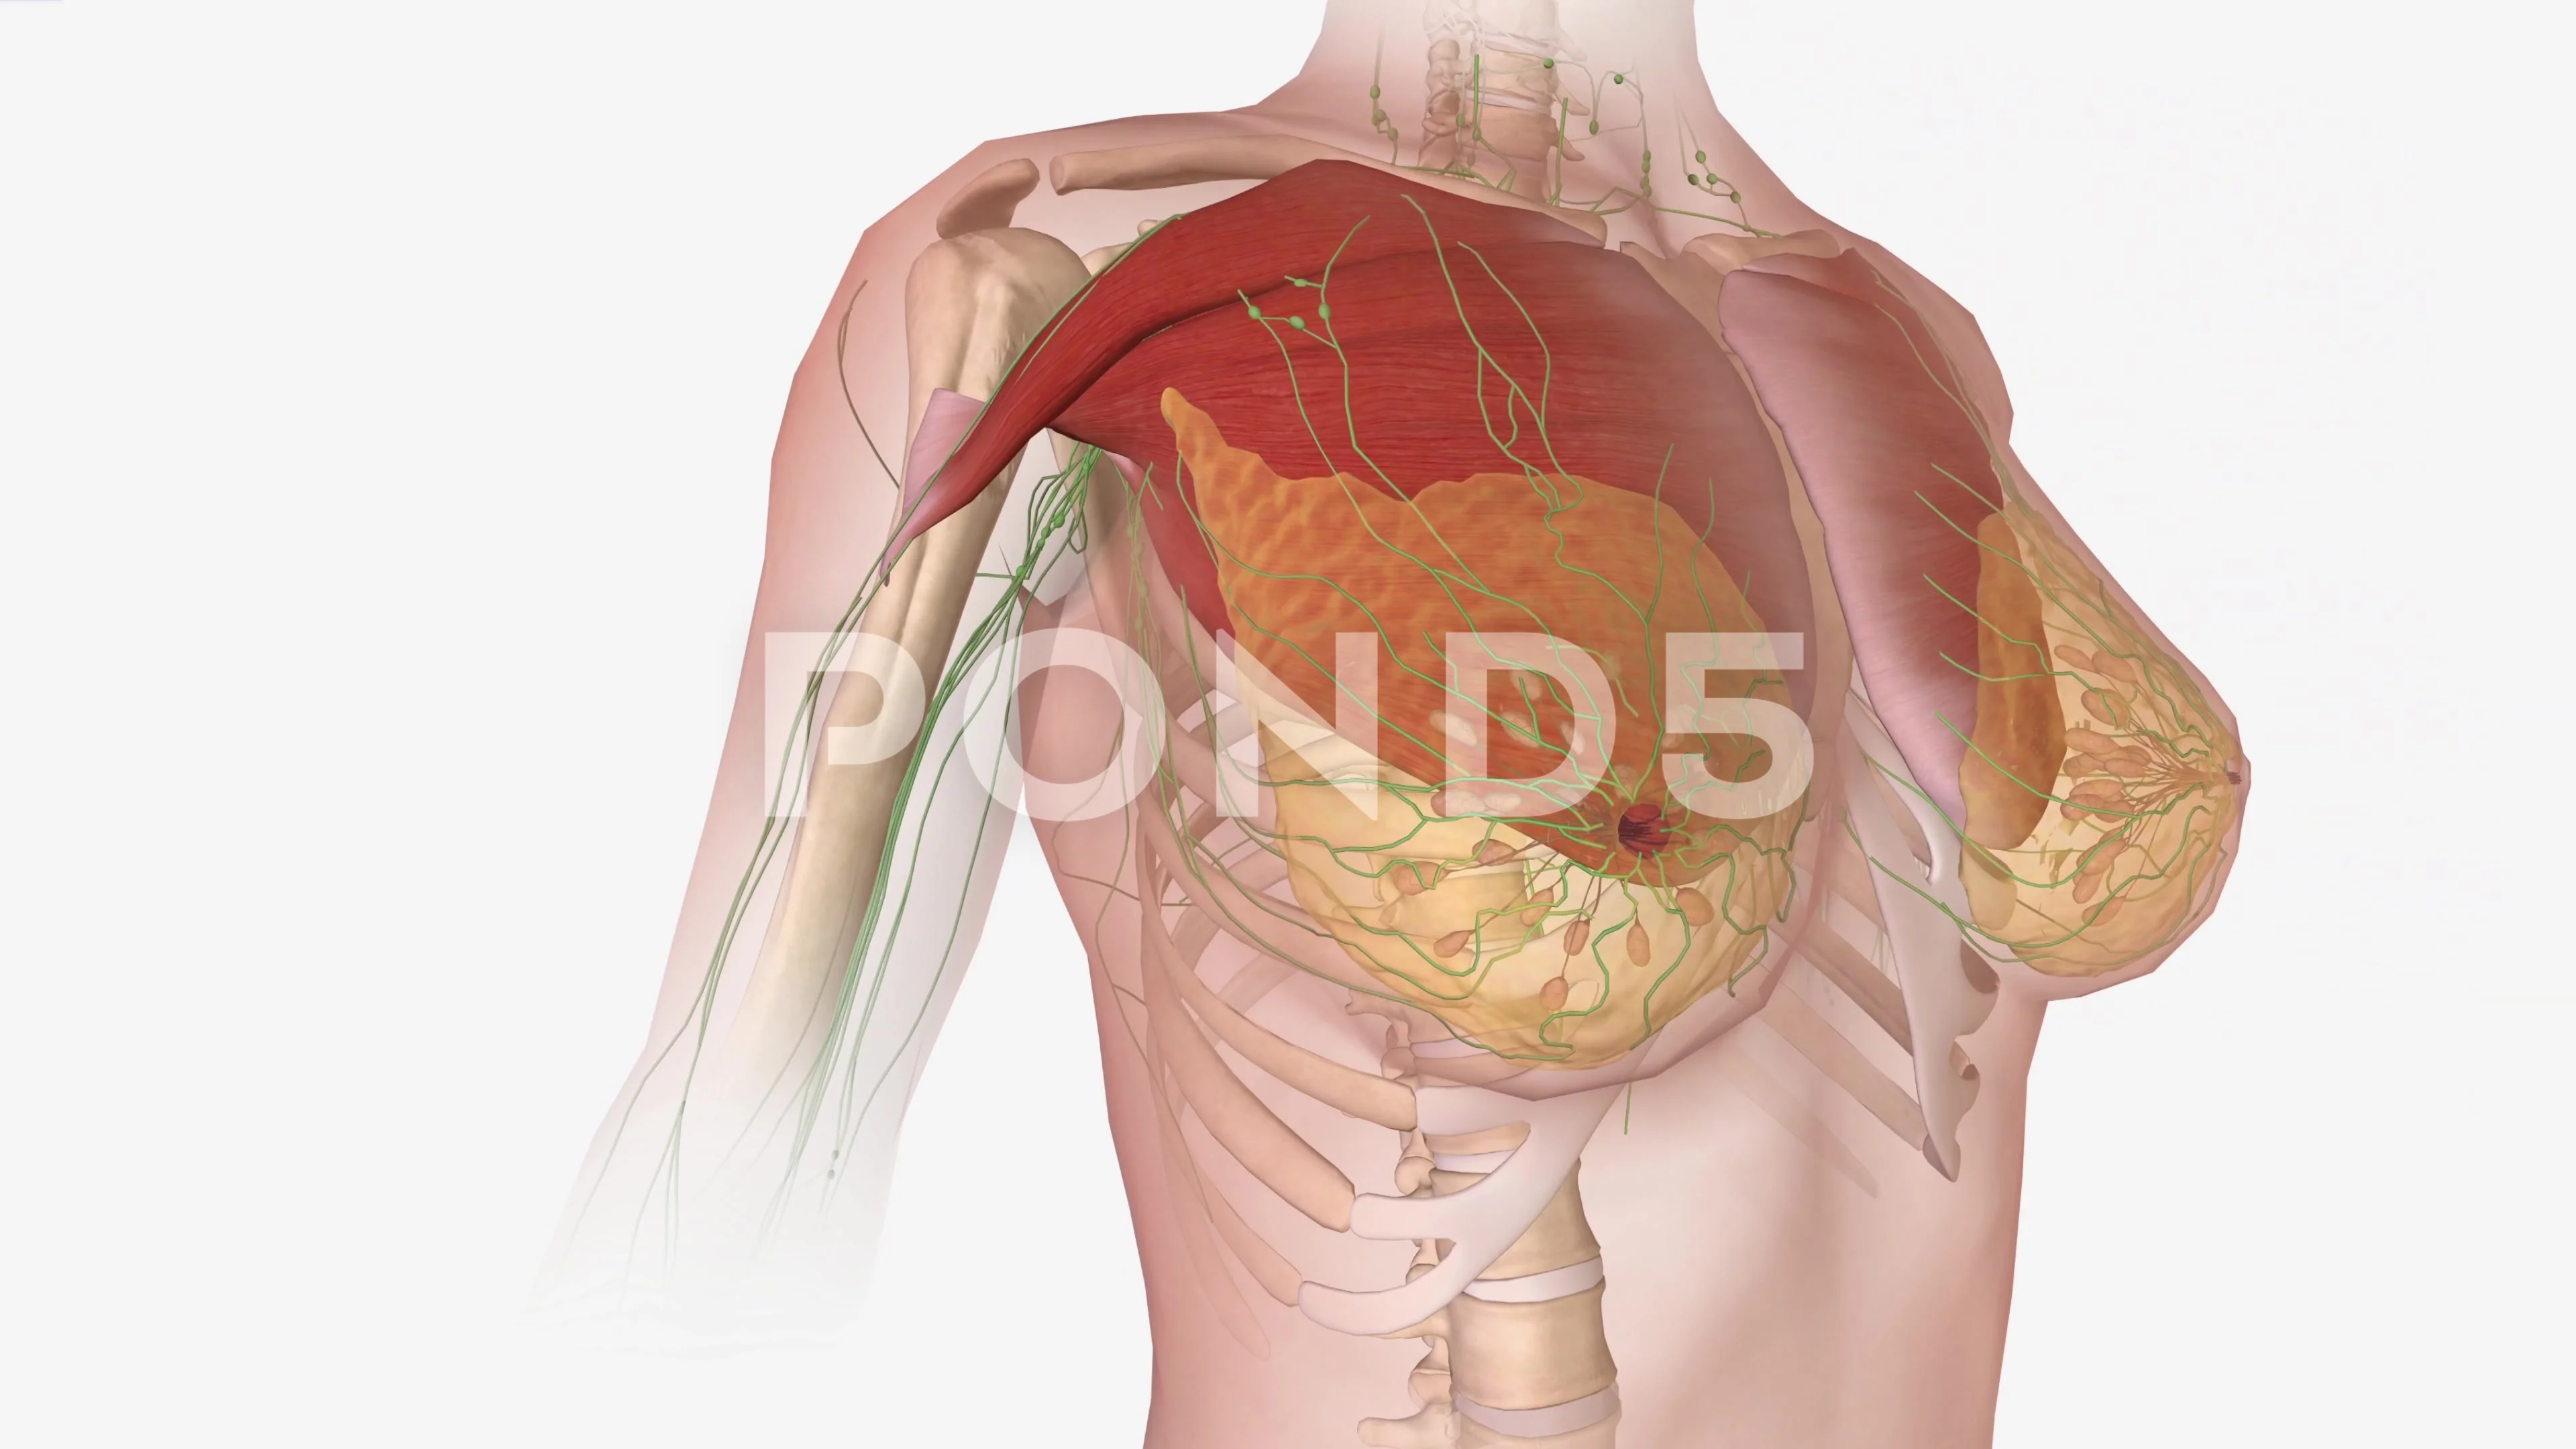 https://images.pond5.com/female-breast-anatomy-includes-internal-footage-244667443_prevstill.jpeg